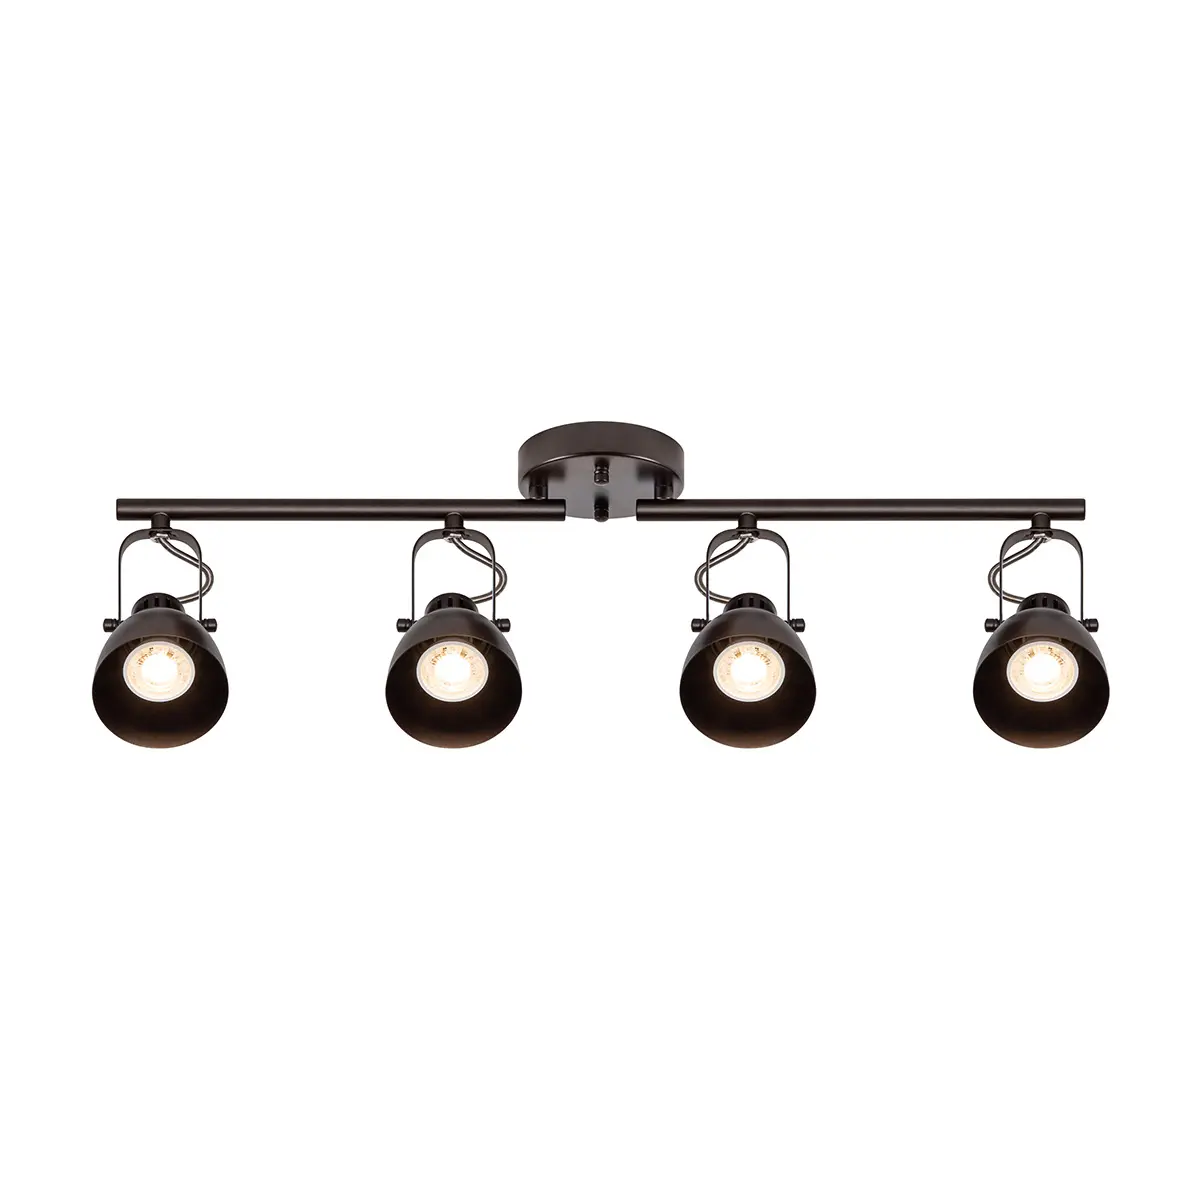 ETL listed 4-Light Bulb Replaceable with 4 8W GU10 Bulbs LED Ceiling Spotlight Track Light Kit